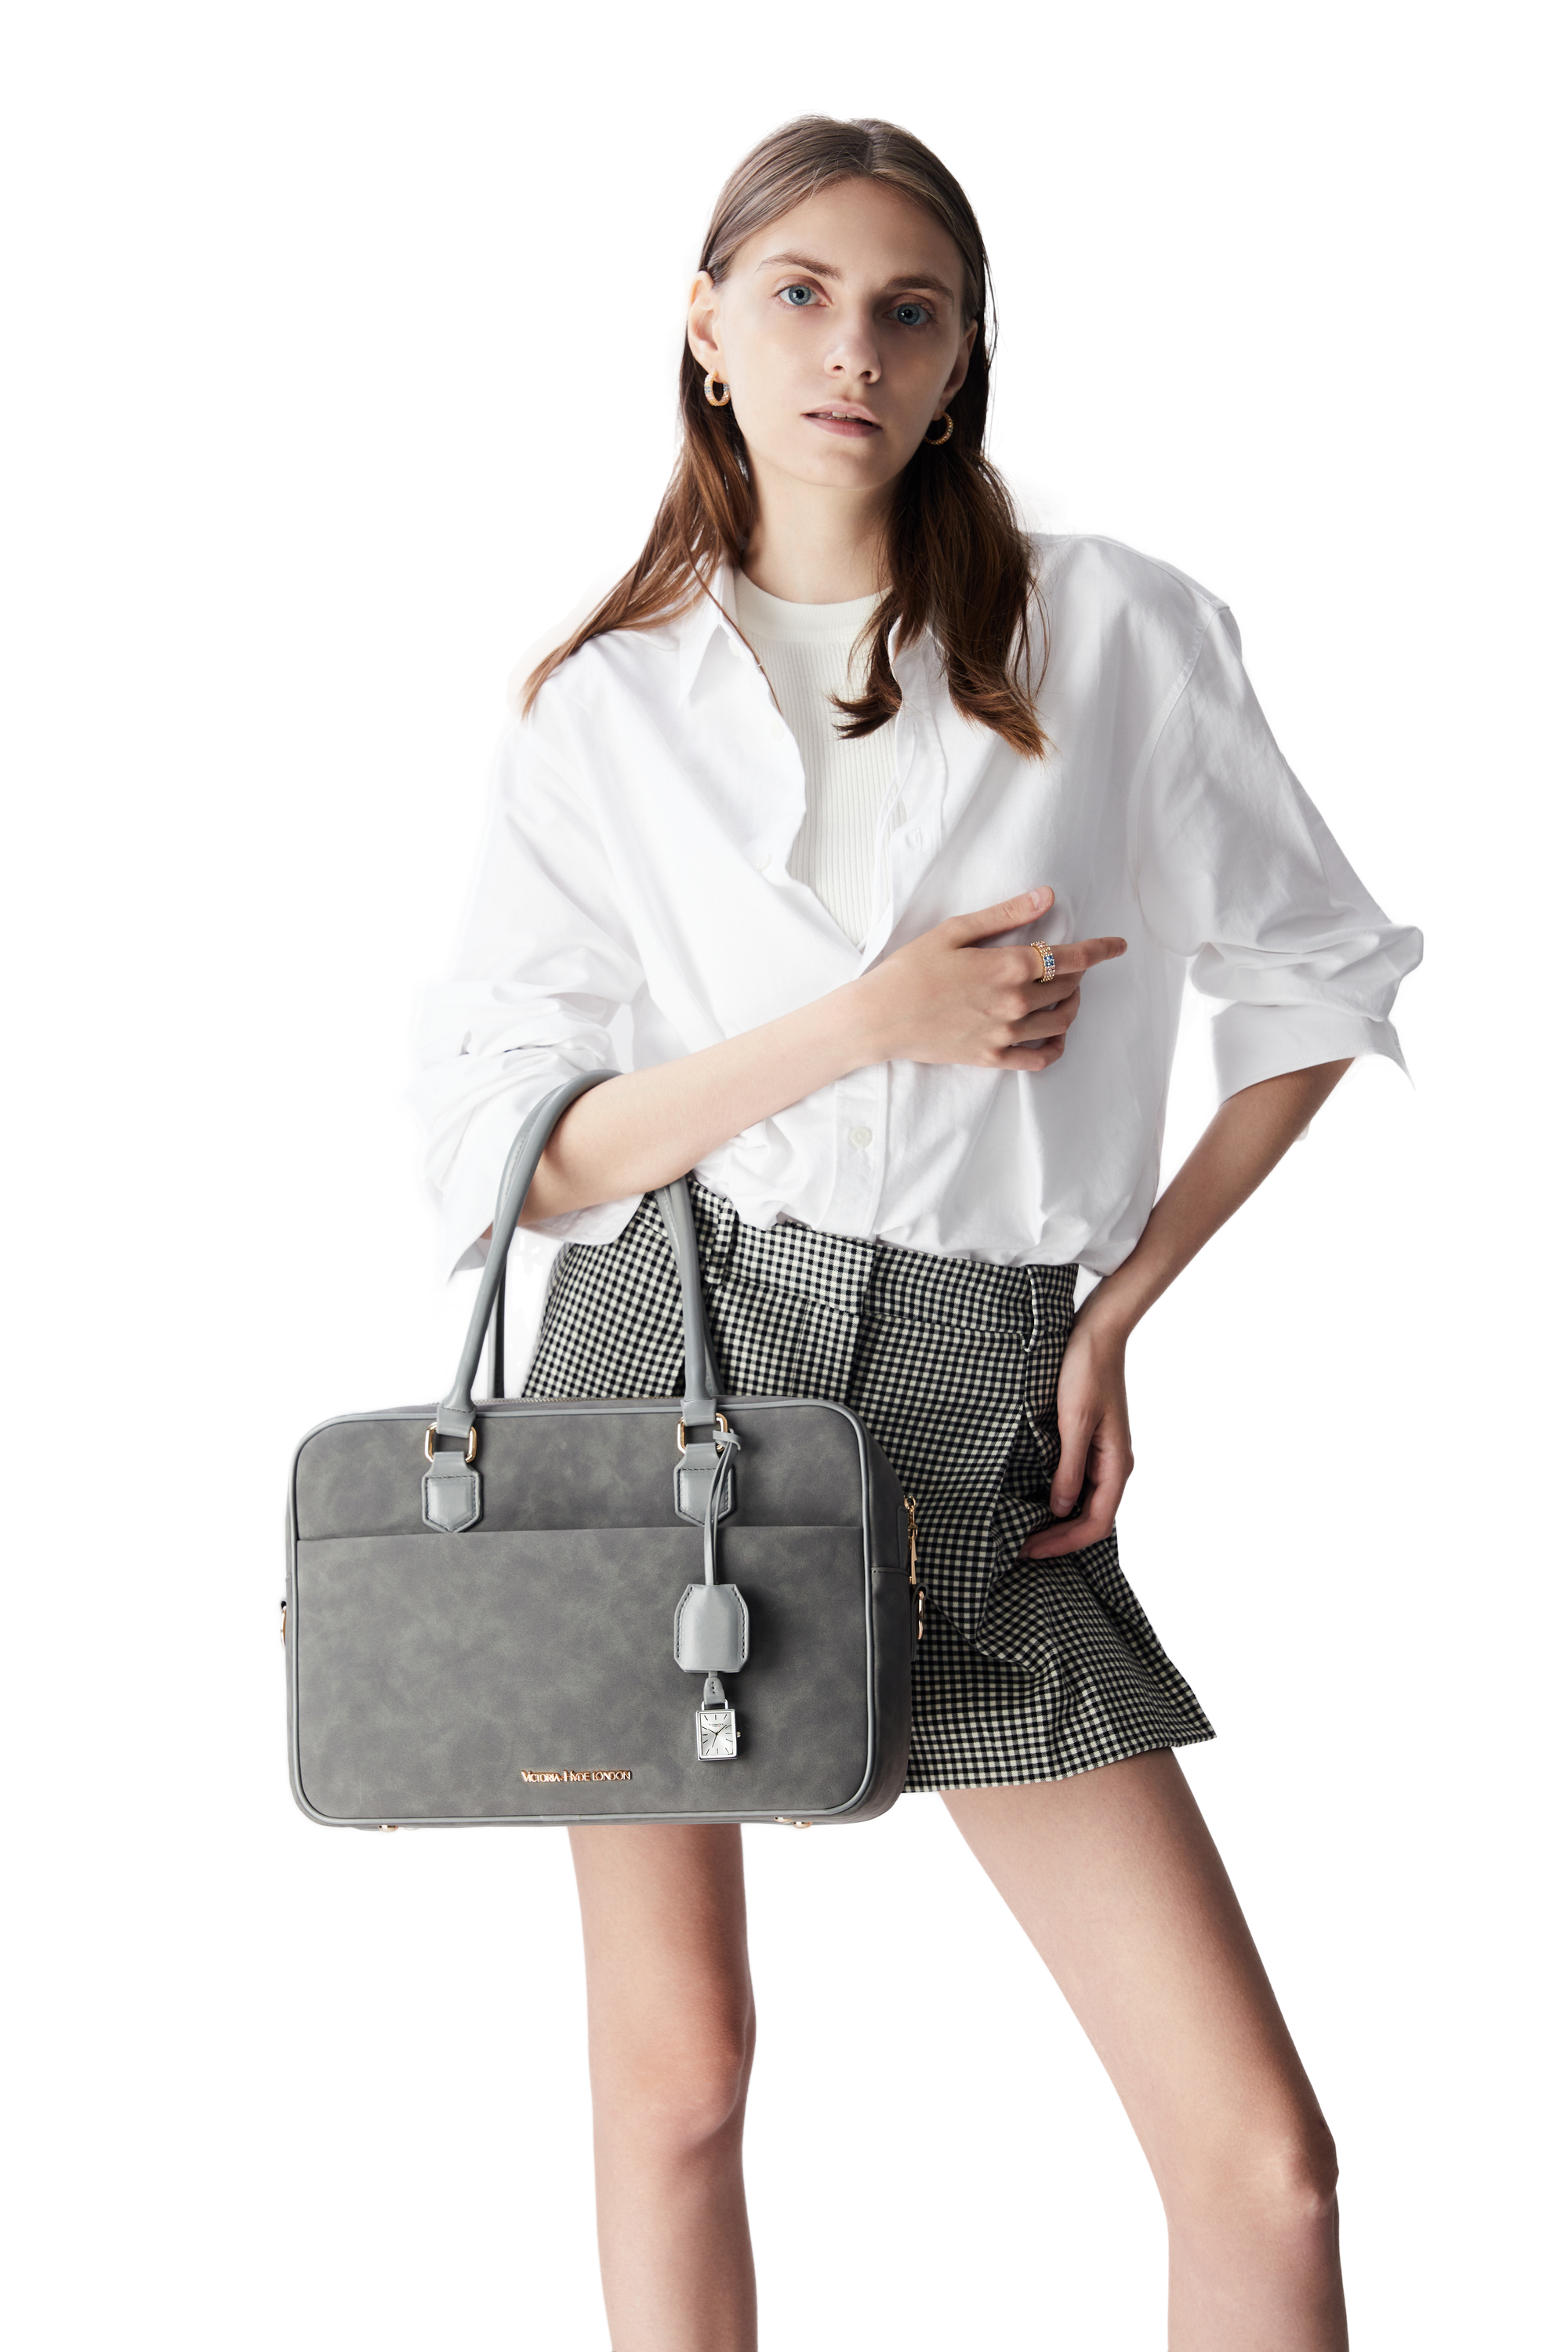 Handbag Margaret in Grey